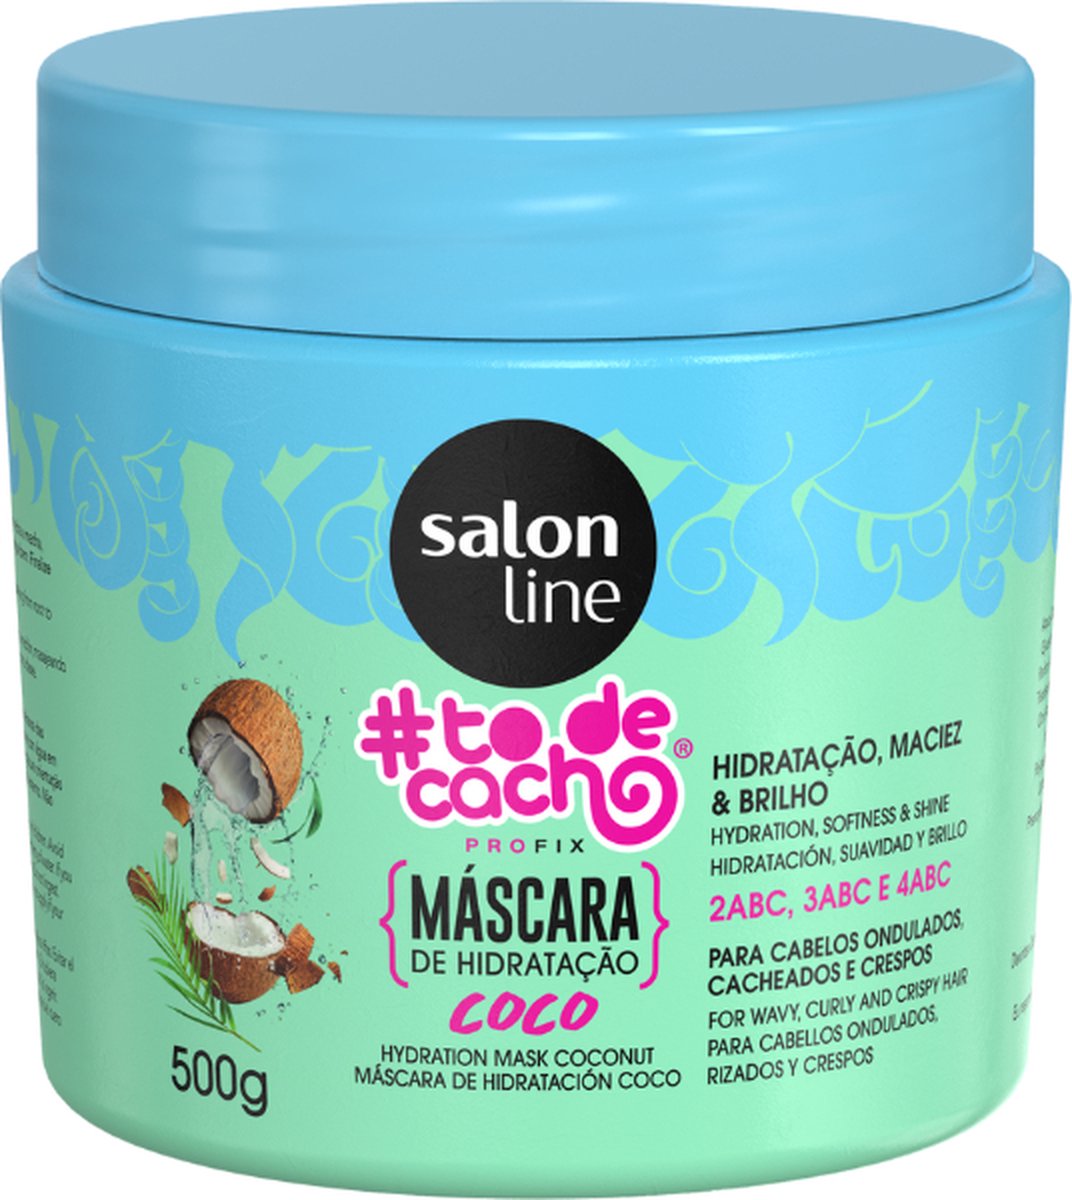 Salon Line #todecacho Coco – Mask 500g